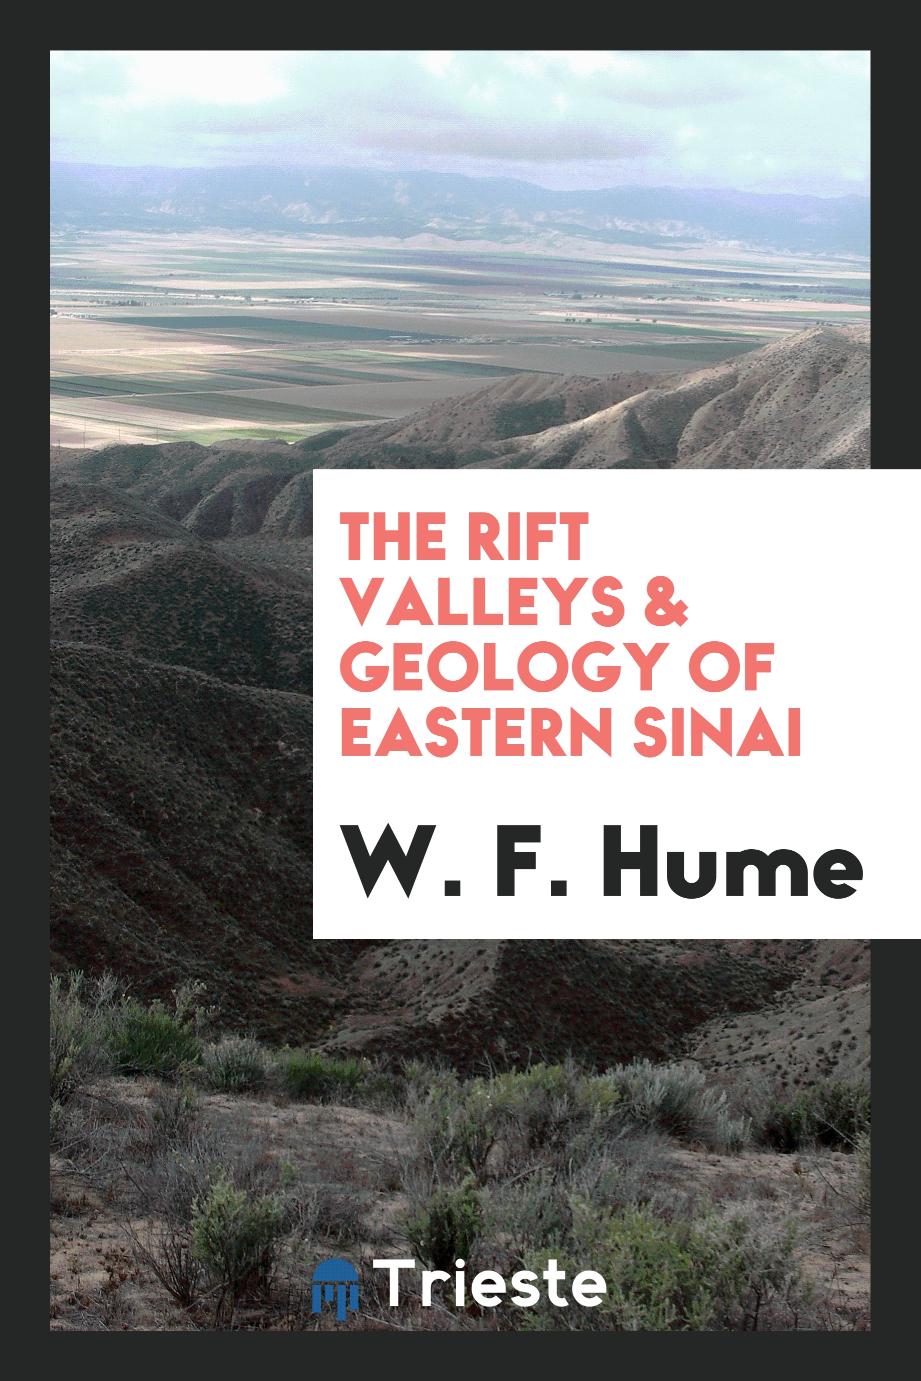 The rift valleys & geology of Eastern Sinai